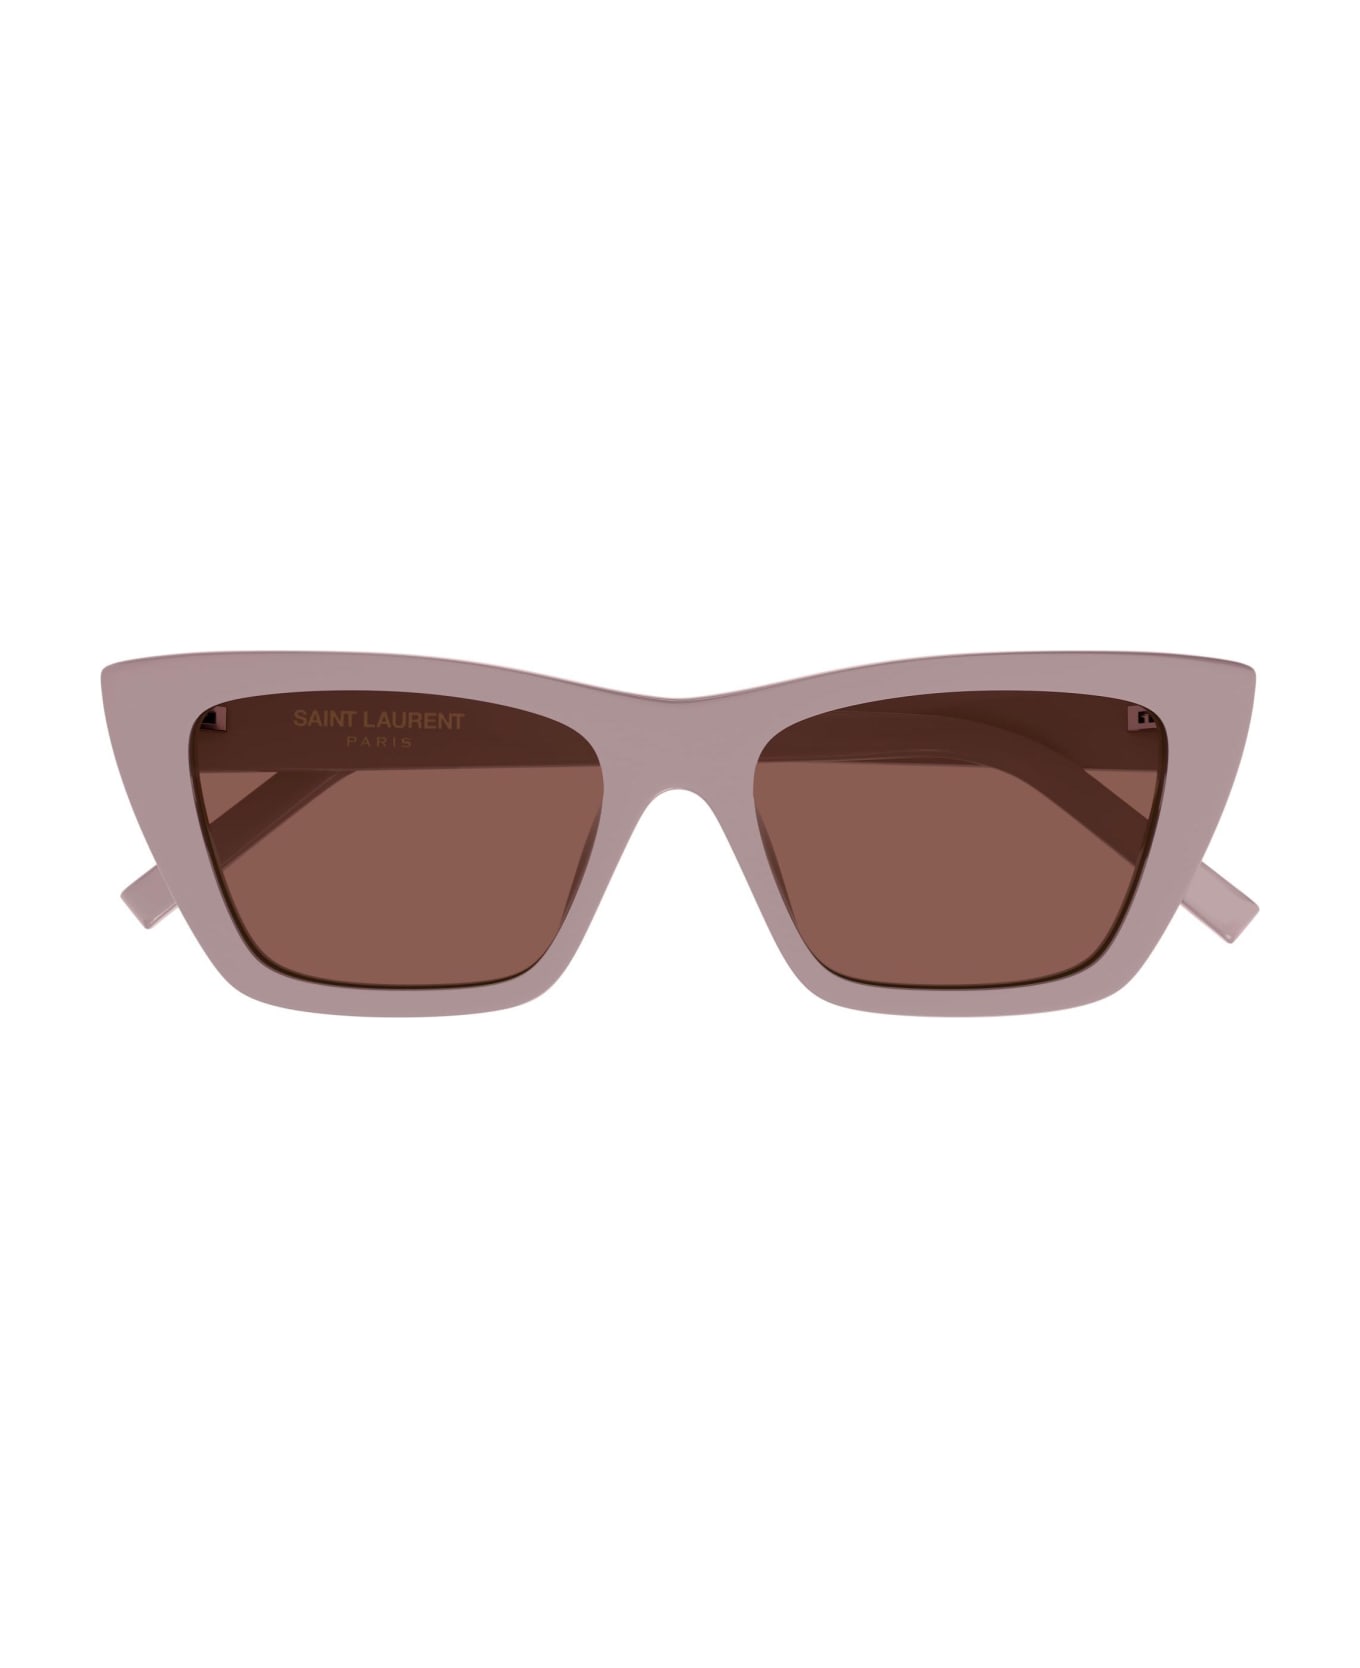 Saint Laurent Eyewear Sunglasses - Rosa/Marrone サングラス